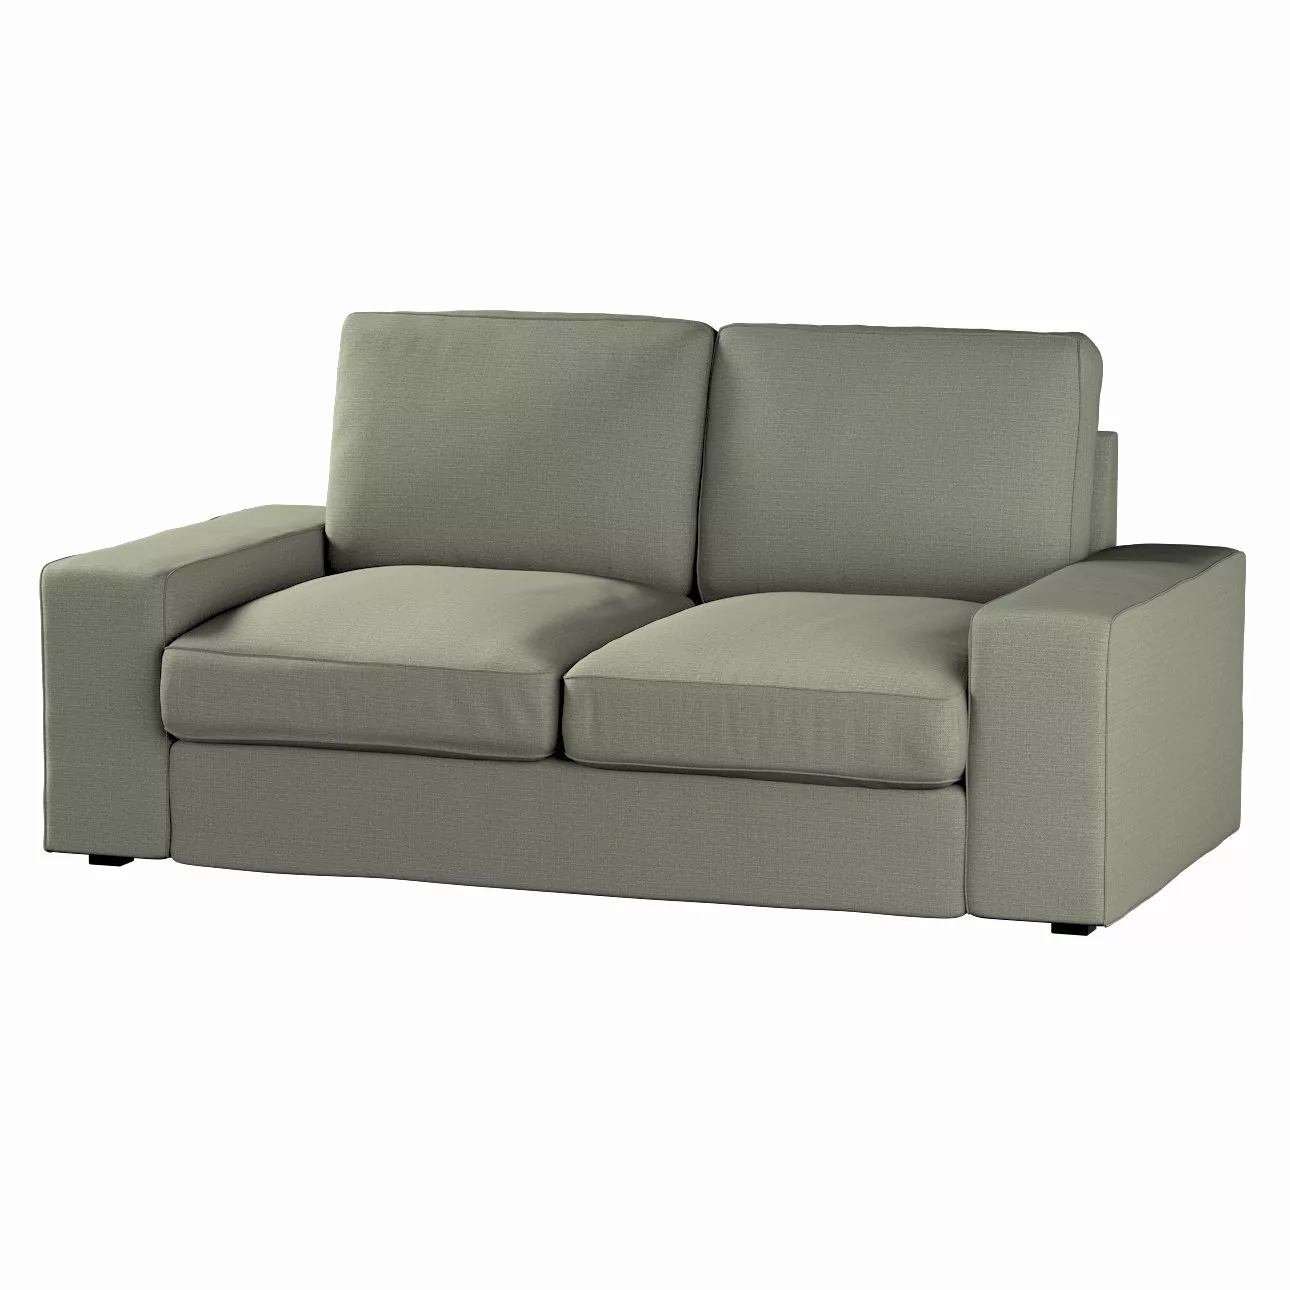 Bezug für Kivik 2-Sitzer Sofa, grau-beige, Bezug für Sofa Kivik 2-Sitzer, L günstig online kaufen